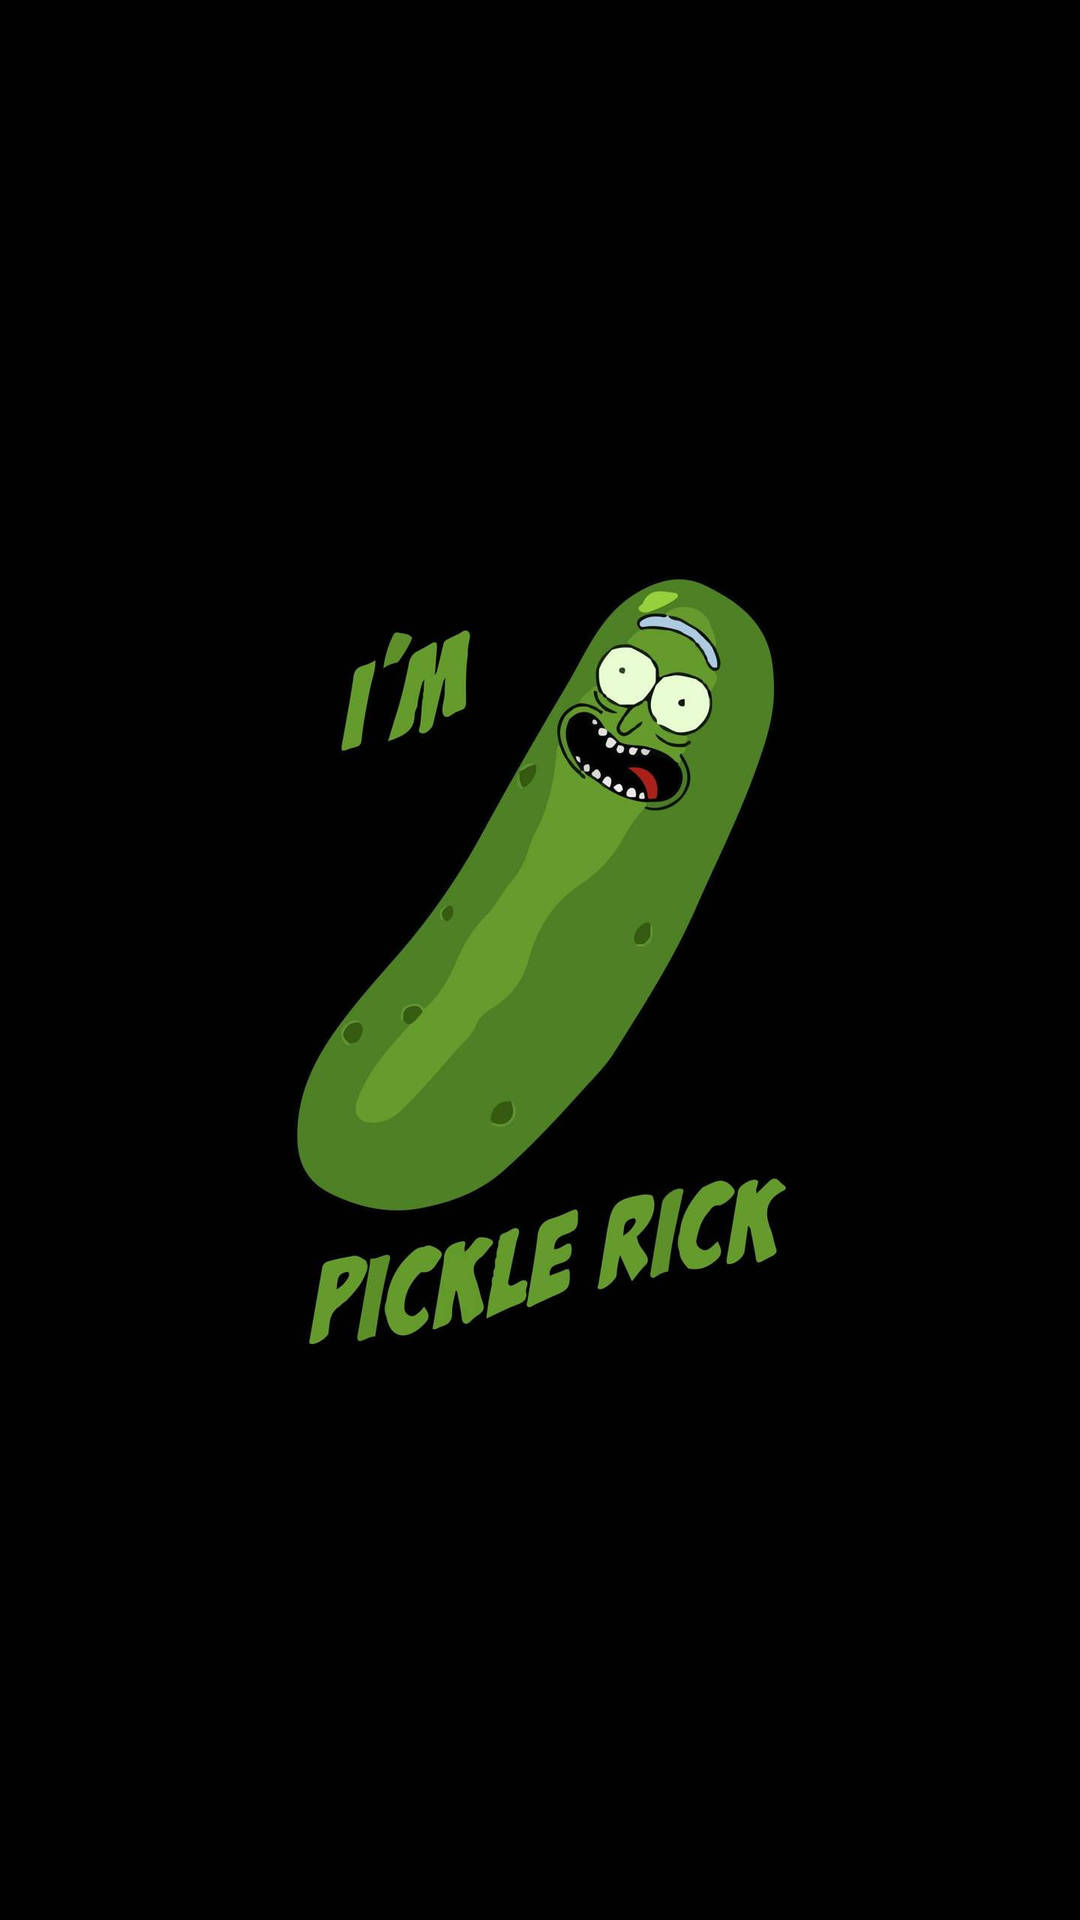 I'm Pickle Rick Background